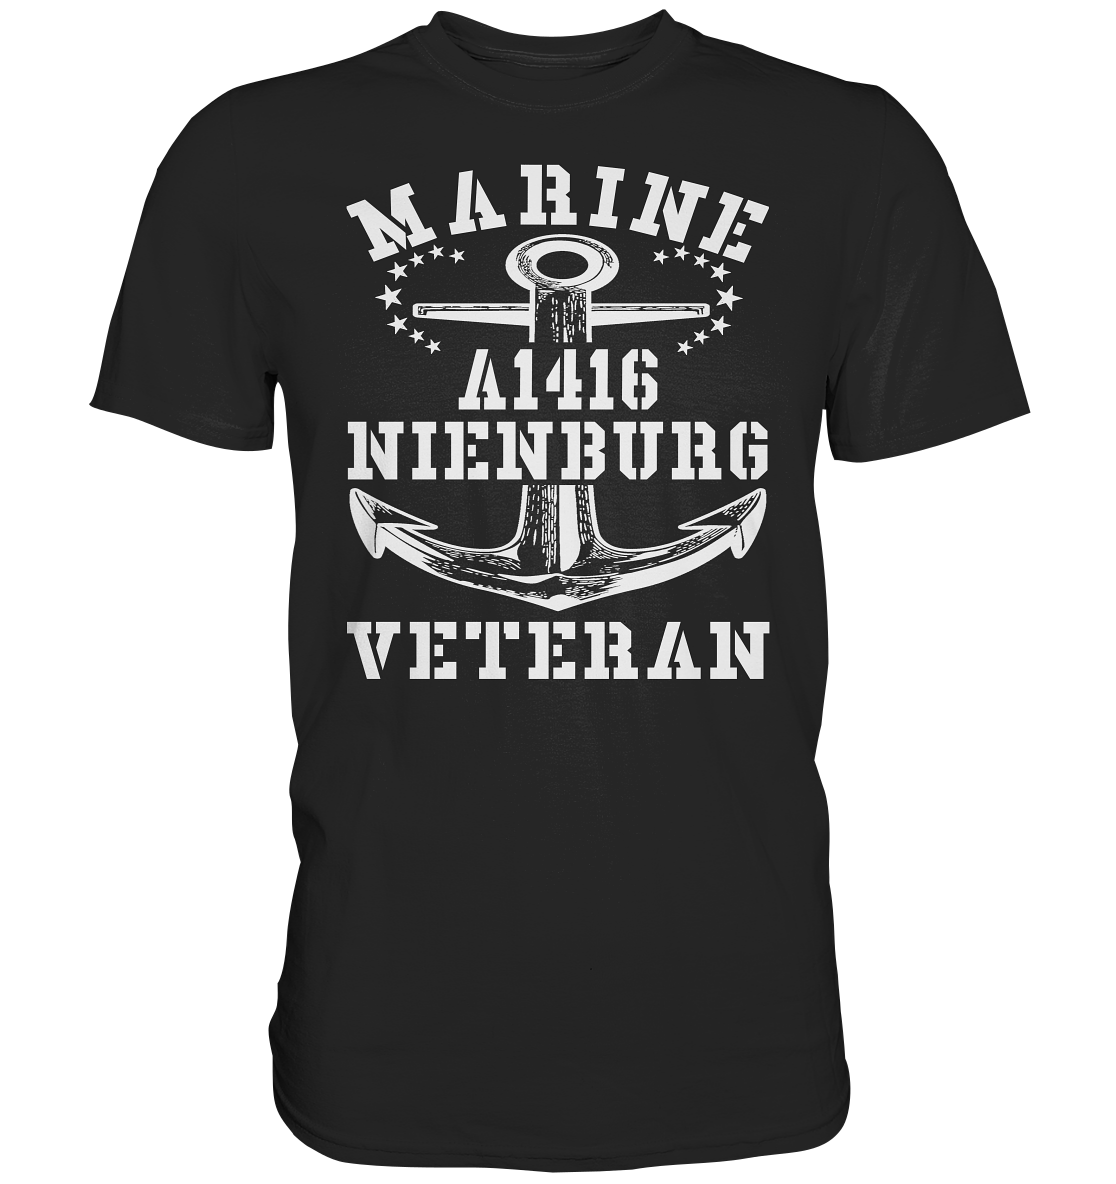 Troßschiff A1416 NIENBURG Marine Veteran  - Premium Shirt